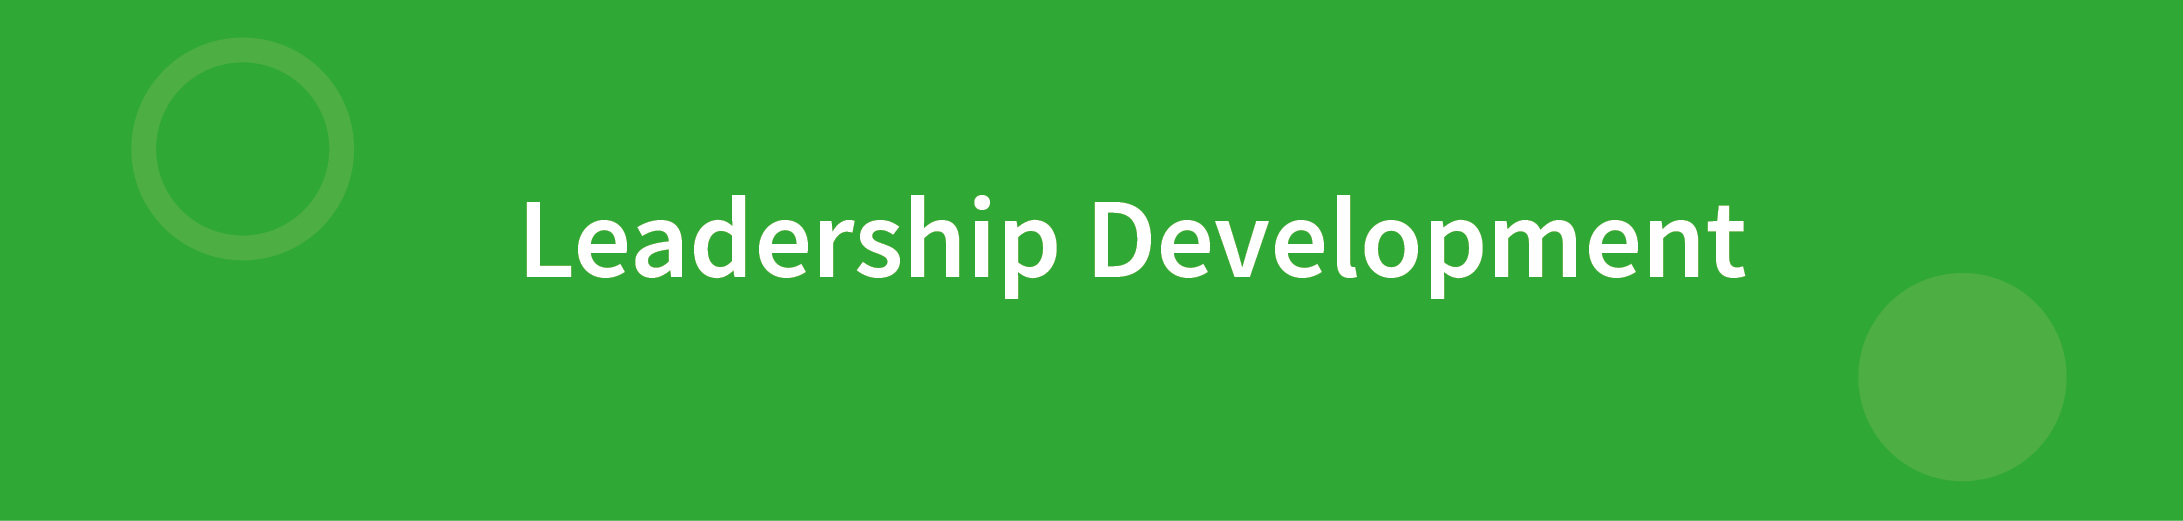 Leadership Development Header English